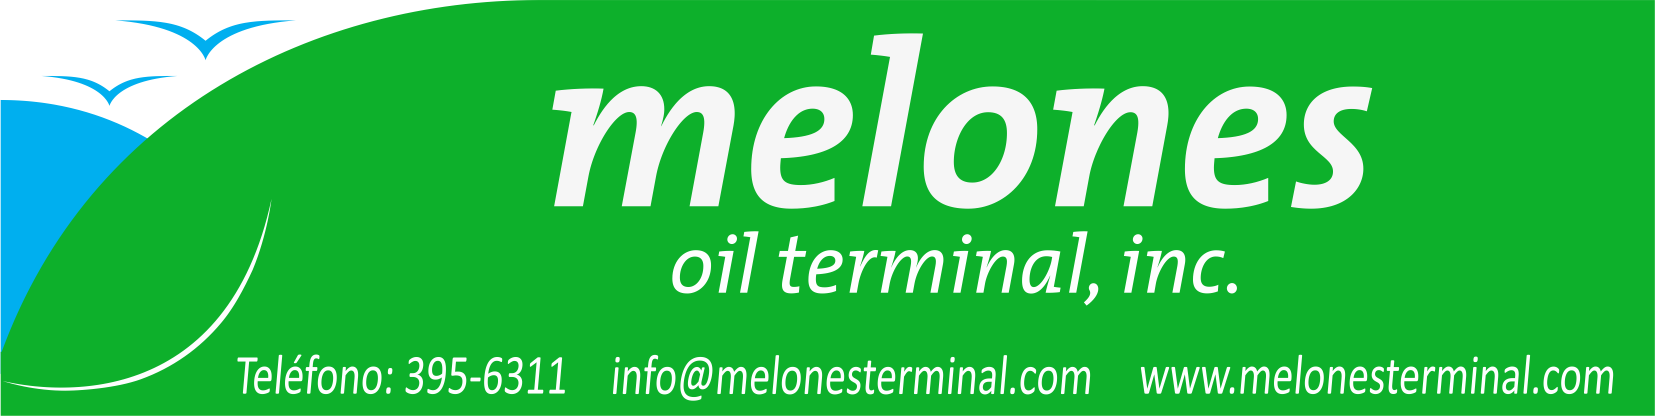 Melones Oil Terminal Inc.